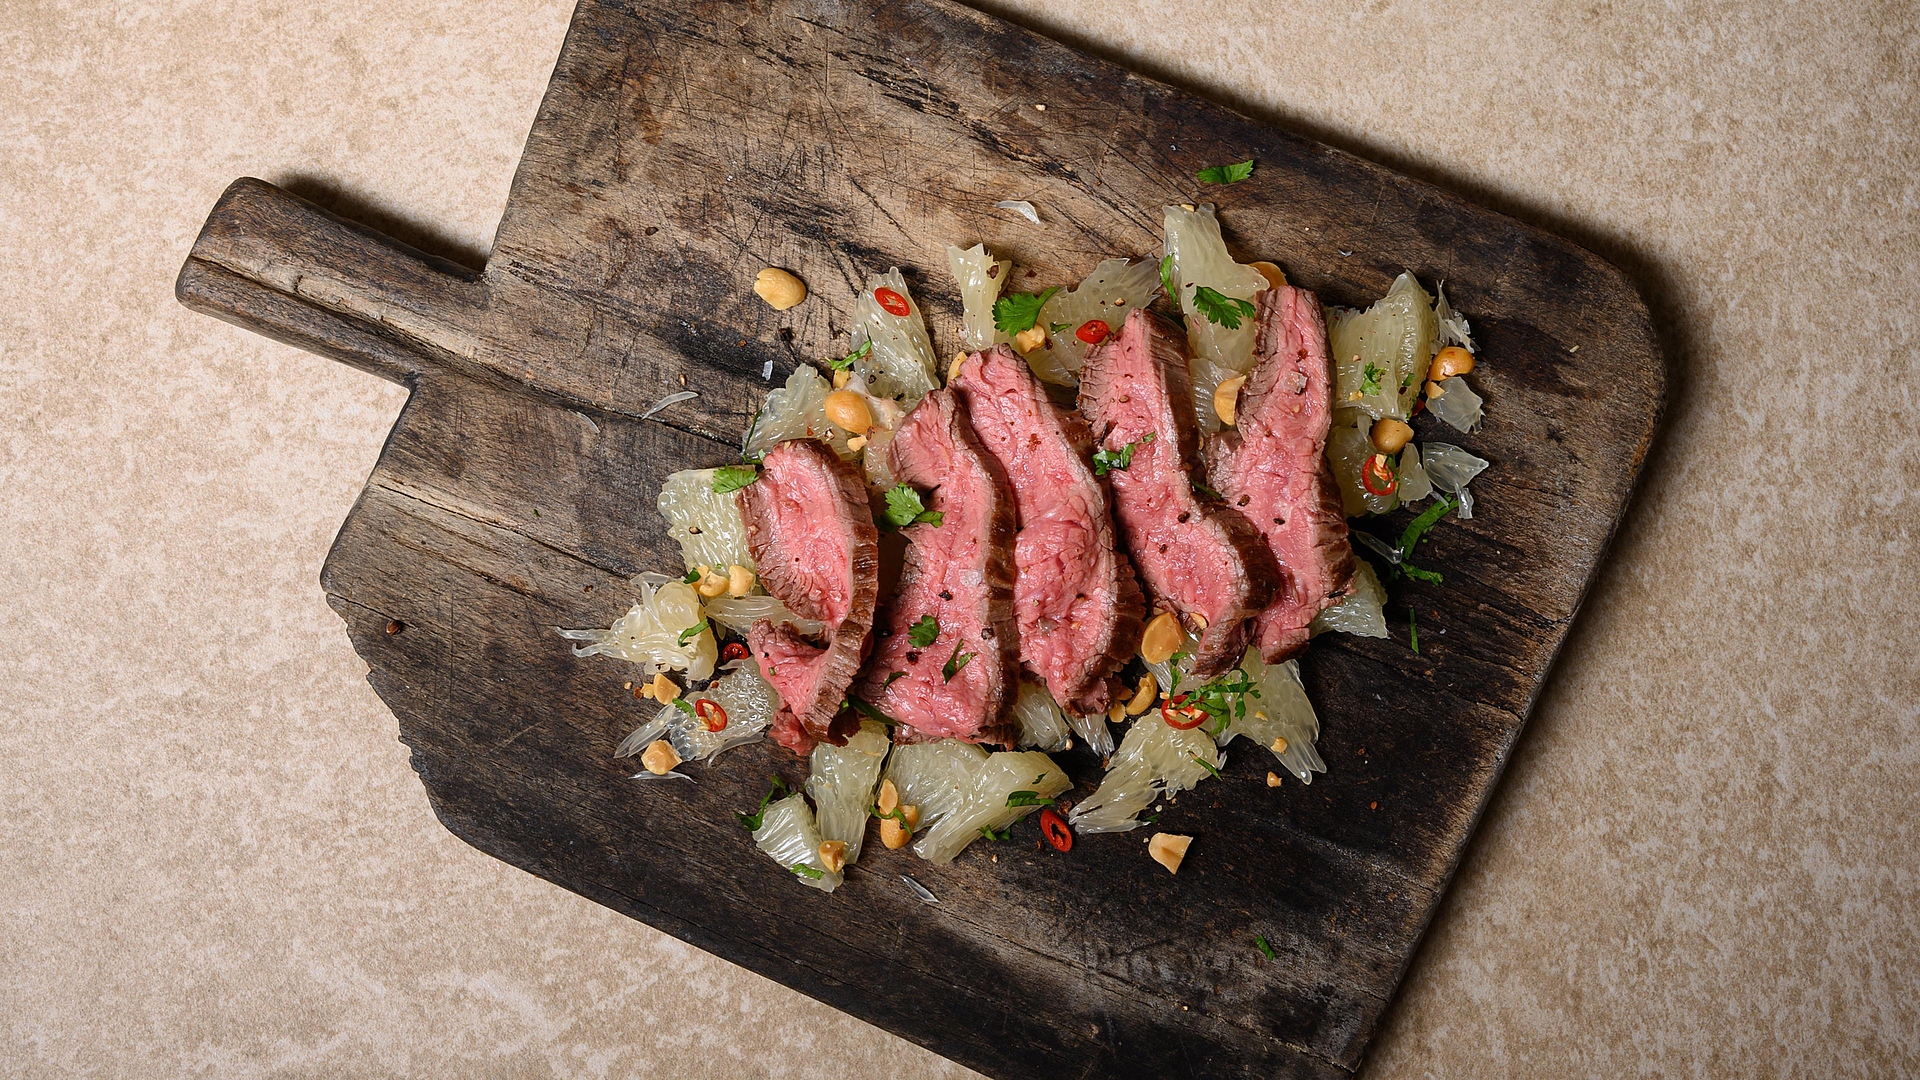 Flank steak on pomelo salad